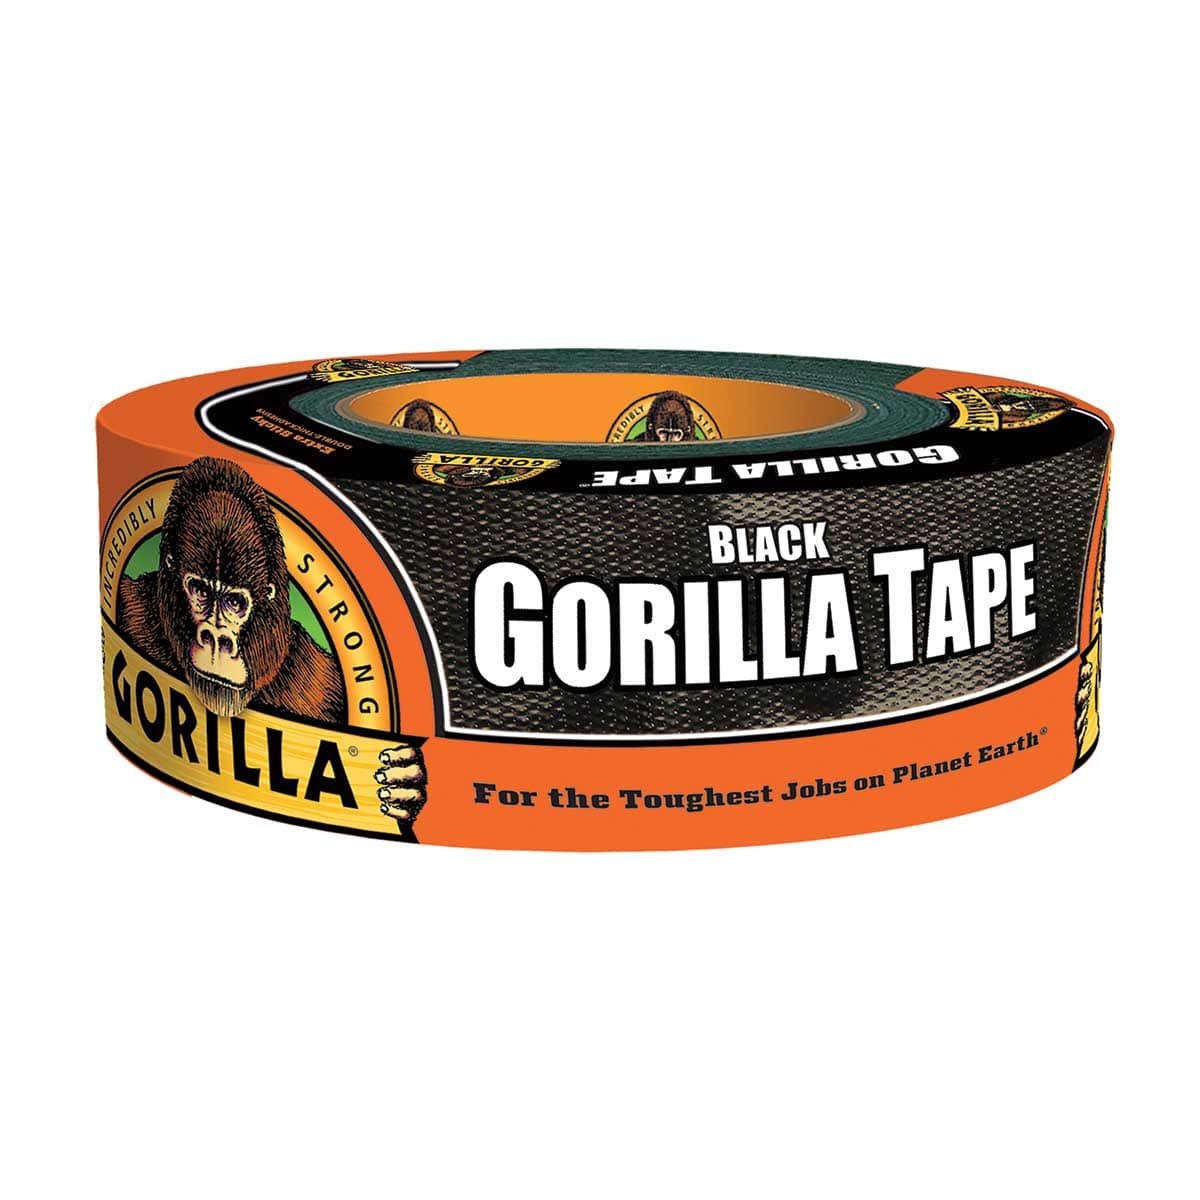 Gorilla Tape 35 yard